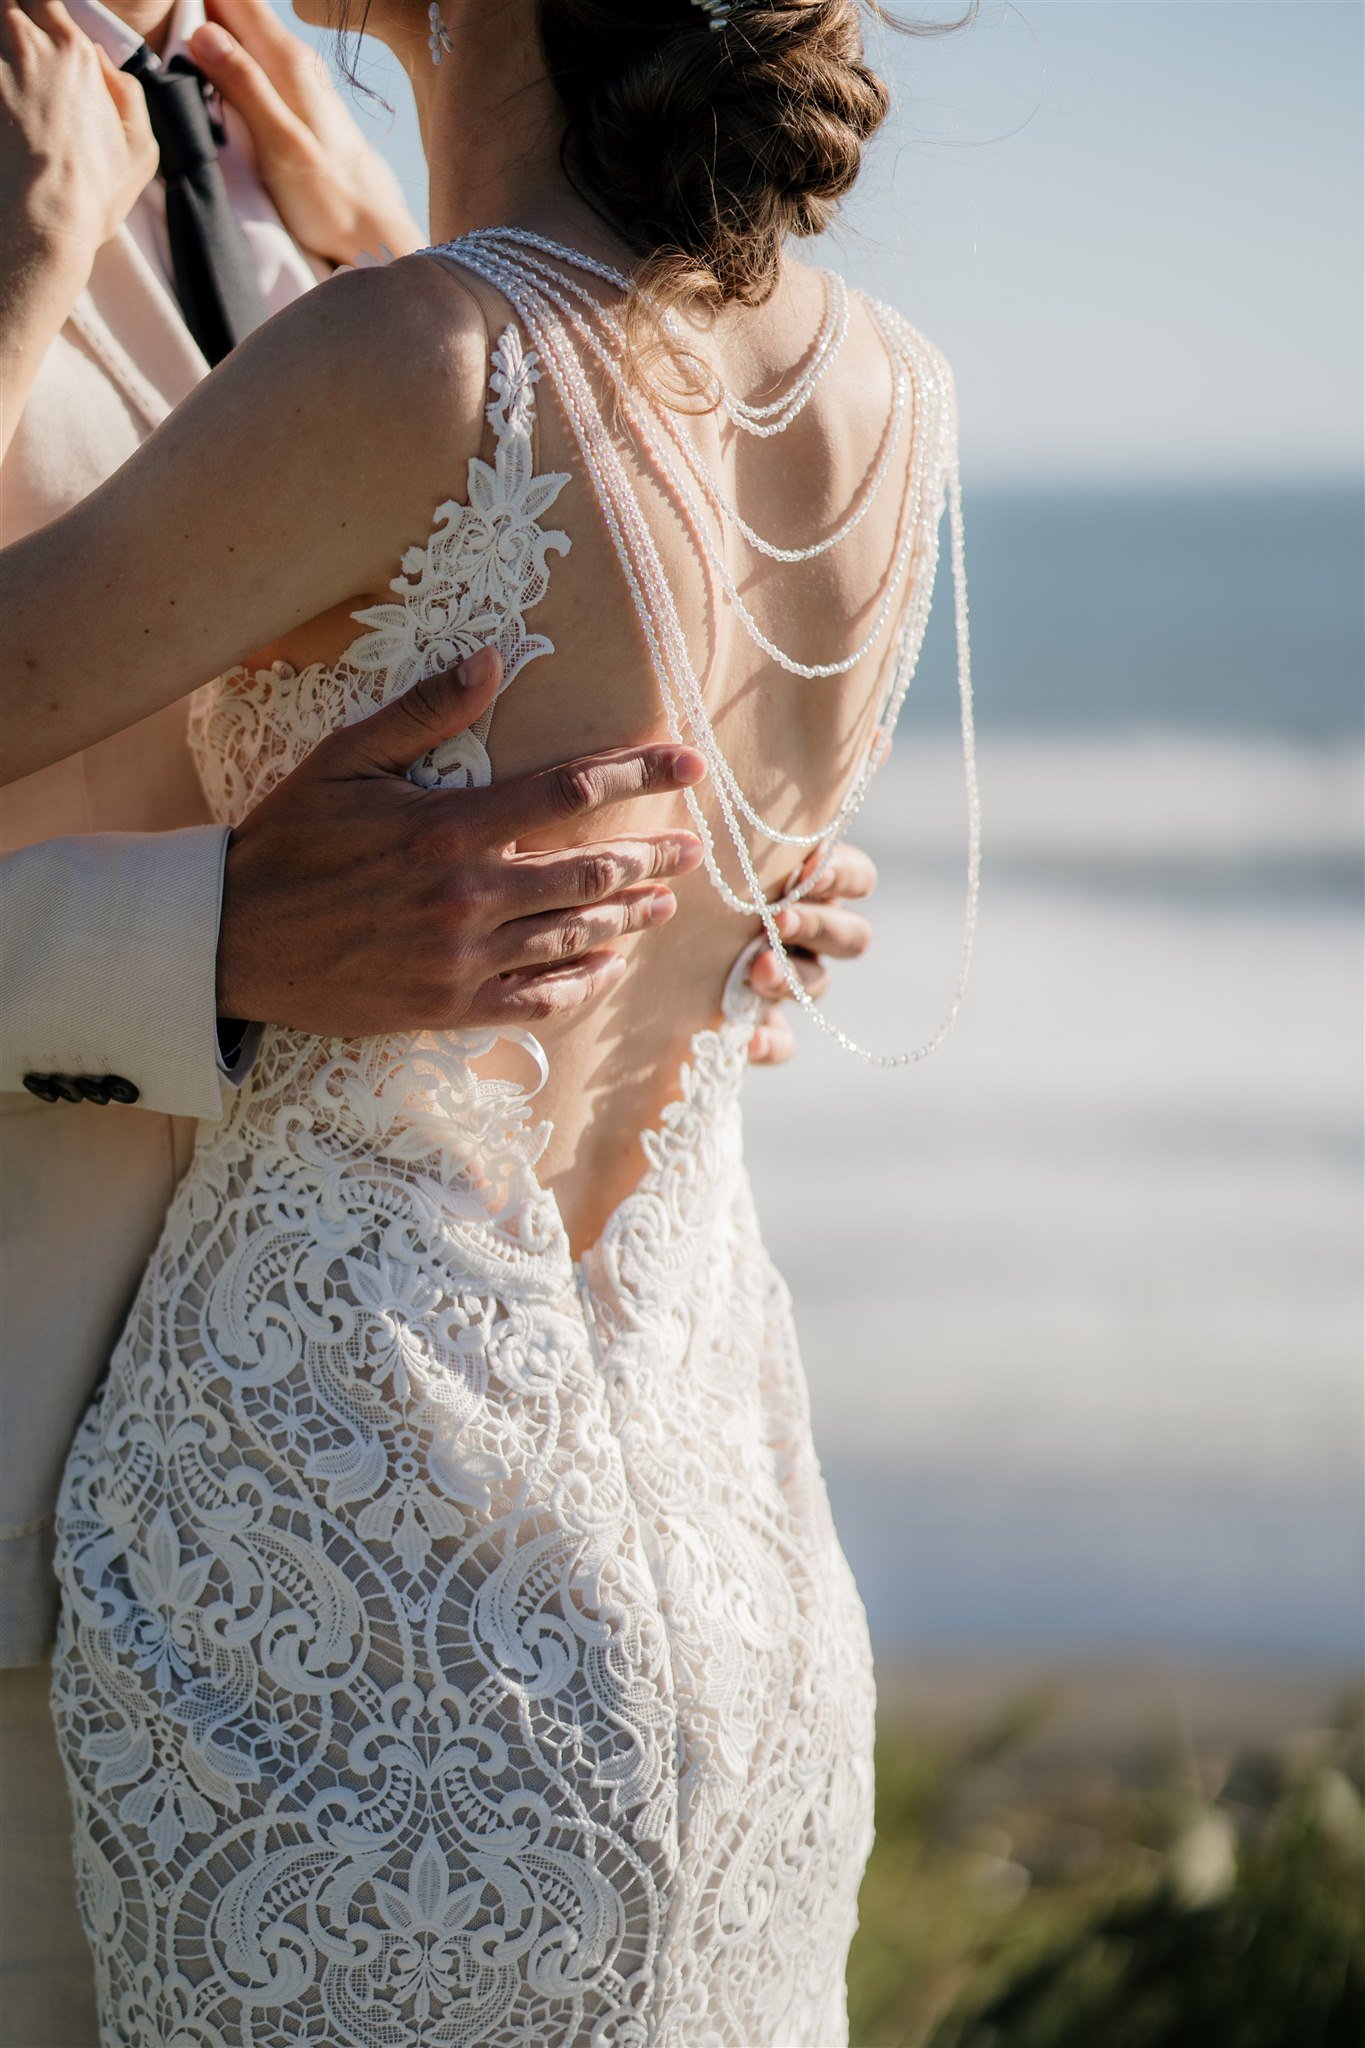 castaways-NZ-new-zealand-auckland-wedding-photographer-photography-videography-film-dear-white-productions-best-venue-waiuku-engagement-elopement-style-beach-intimate-miss-chloe-gown-dress (10).jpg